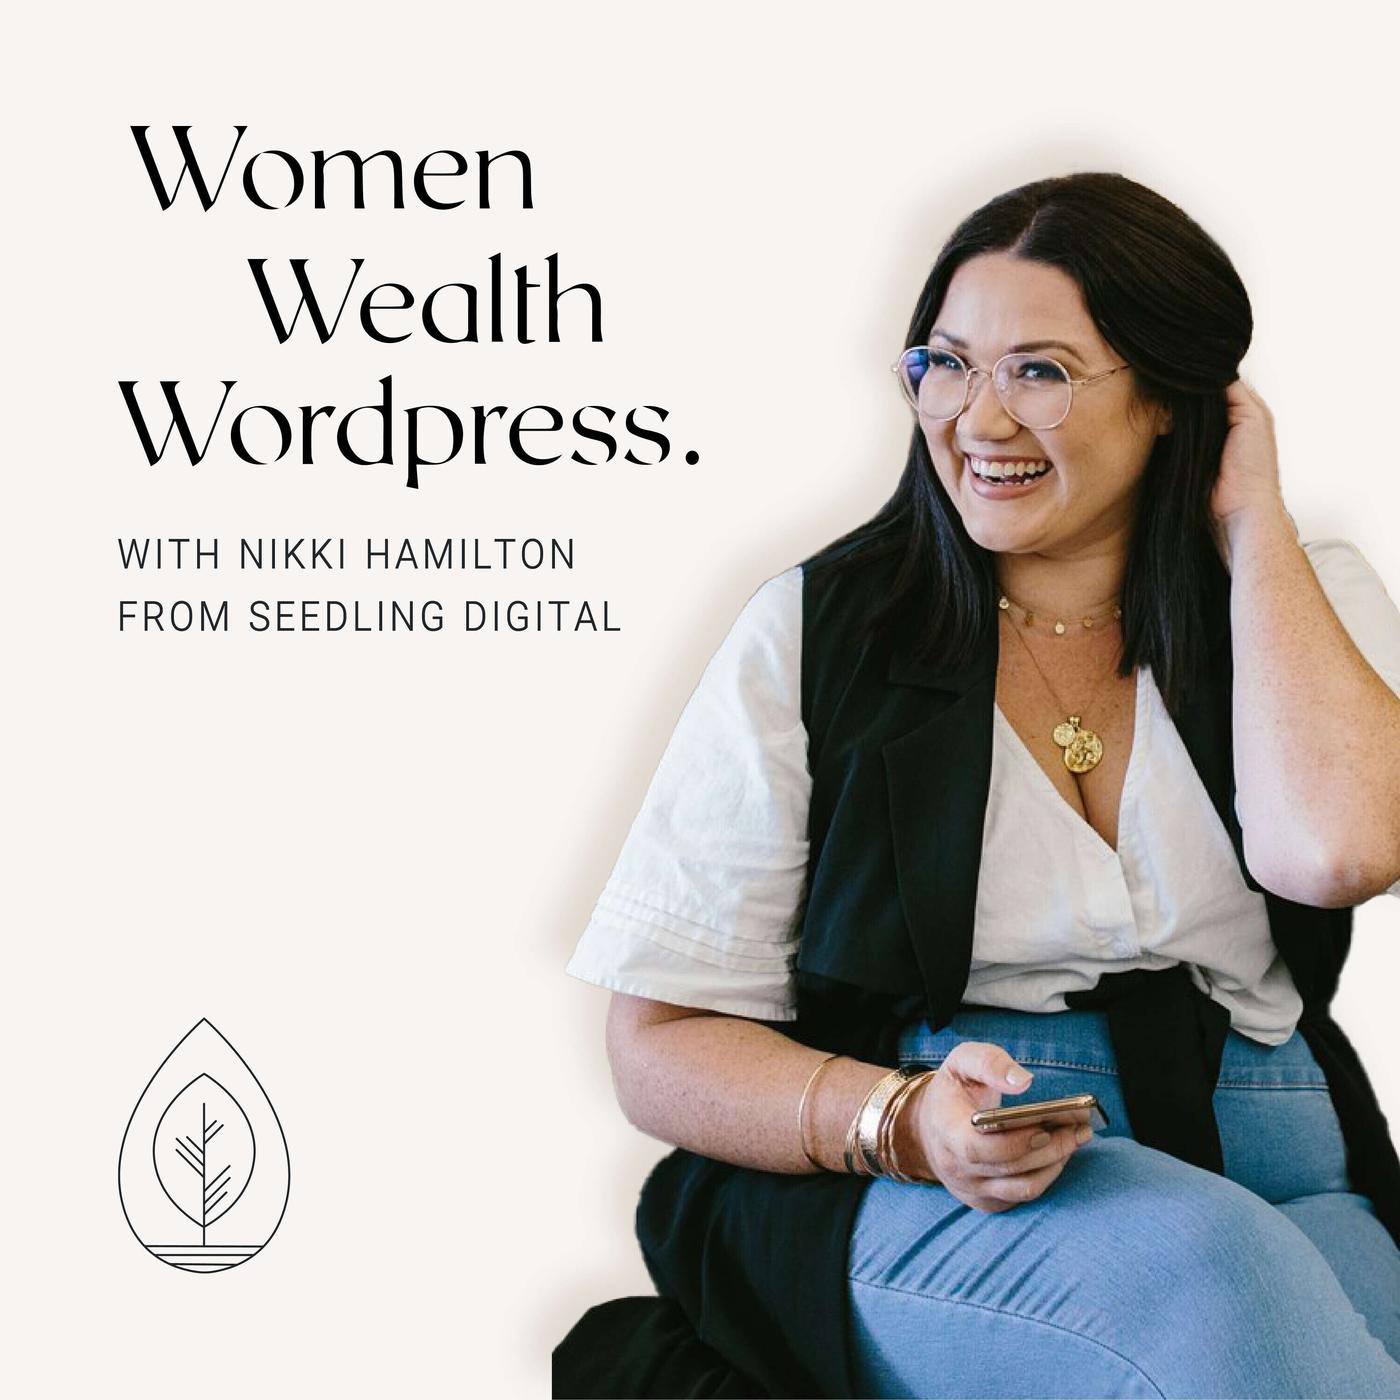 Women Wealth Wordpress podcast show image